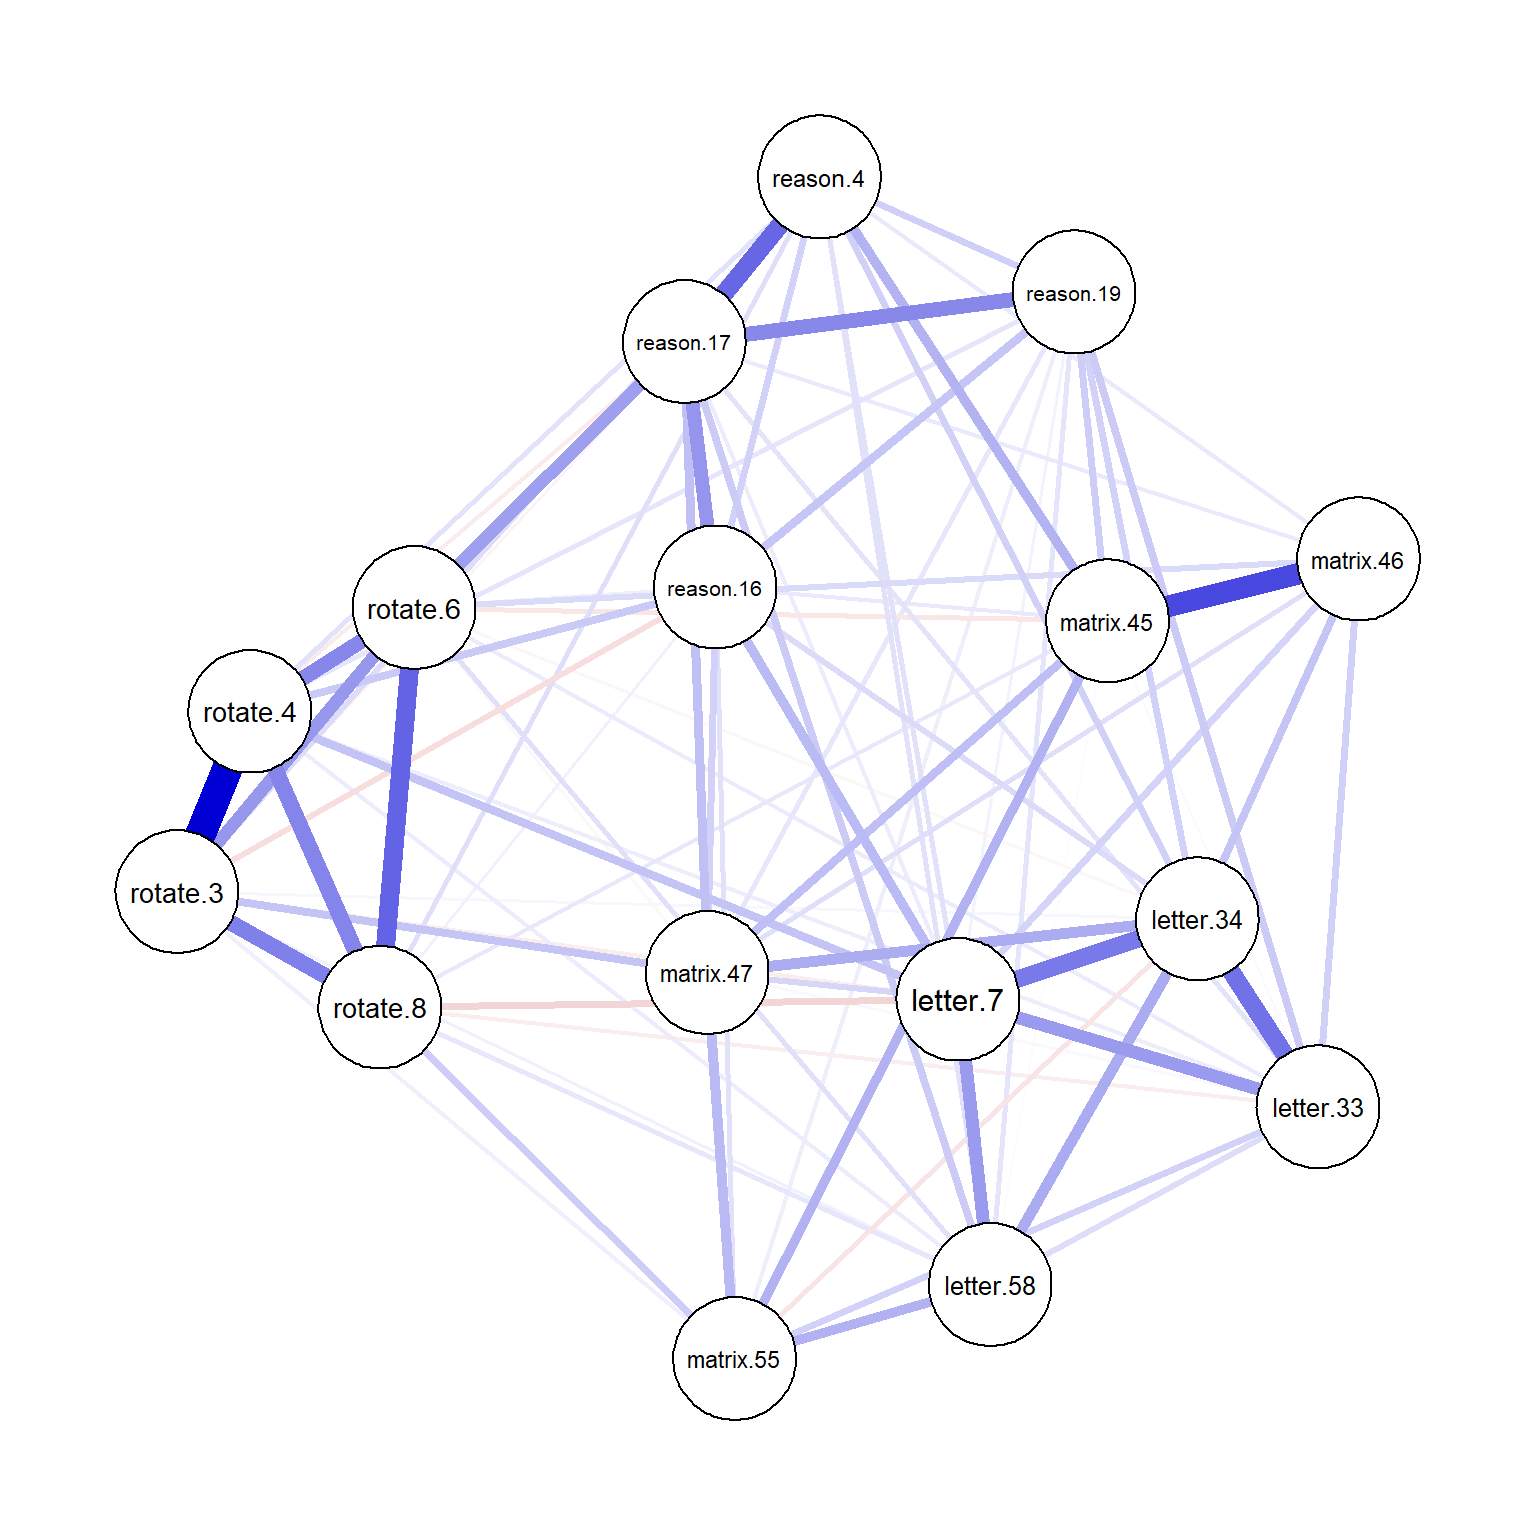 Network plot for the GGM